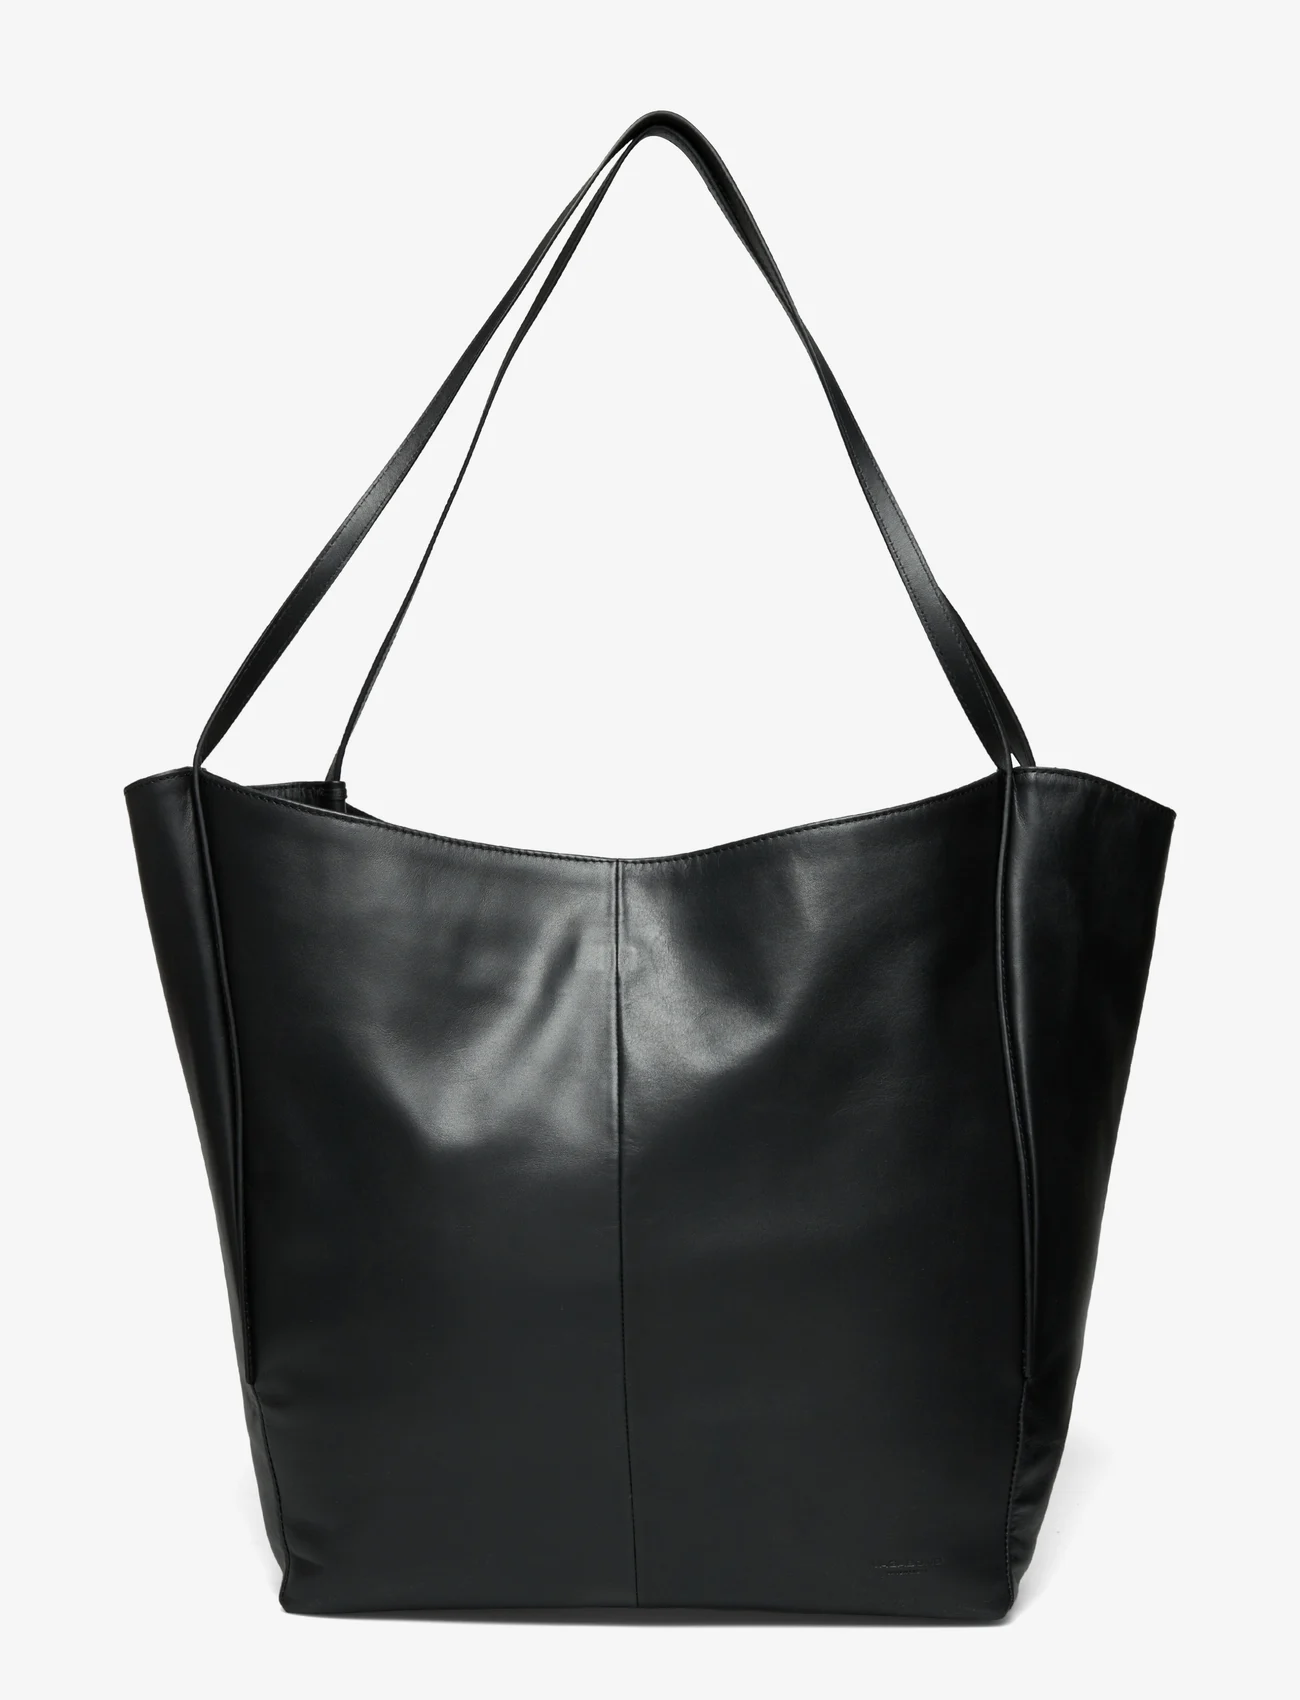 VAGABOND - MASELLA - tote bags - black - 0